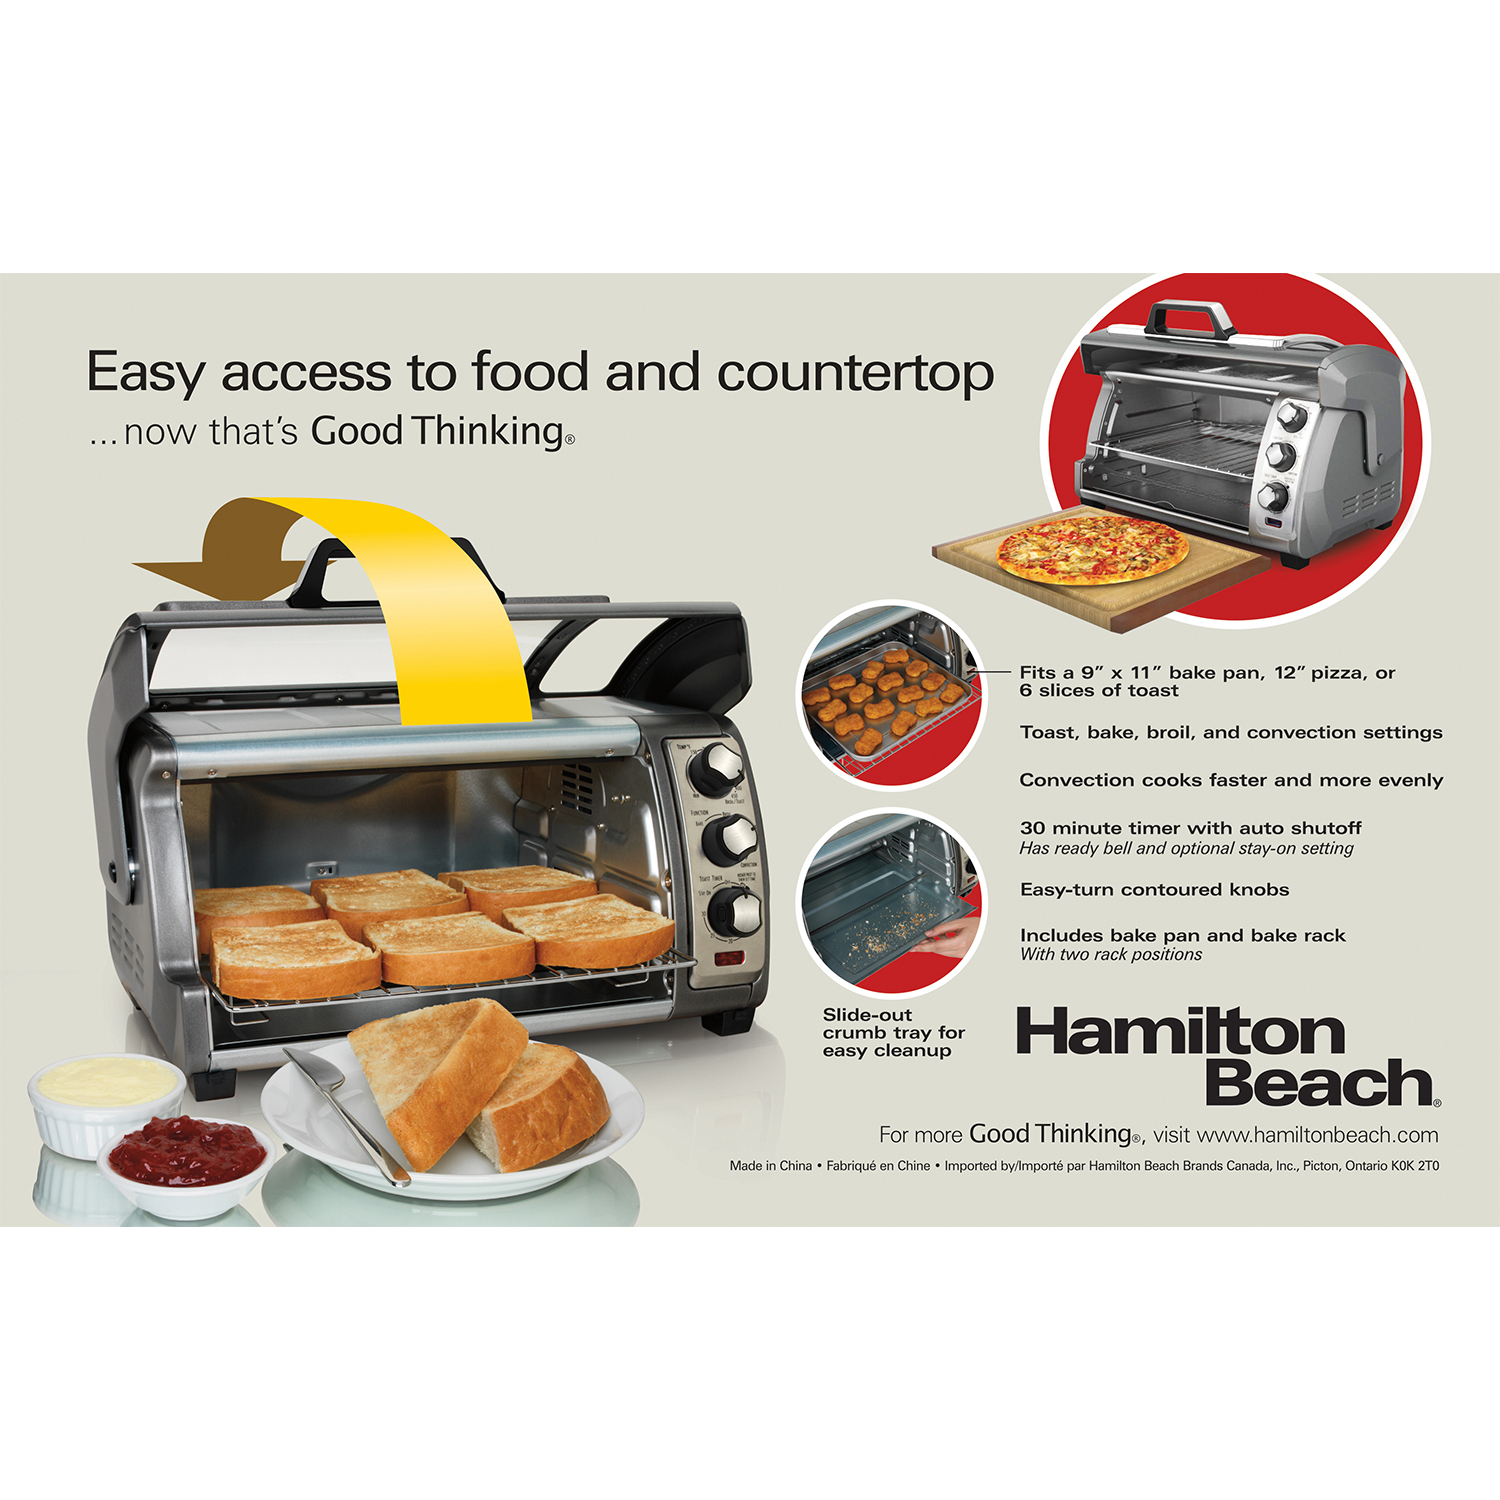 Hamilton Beach Easy Reach® Toaster Oven with Roll-Top Door - 31126D